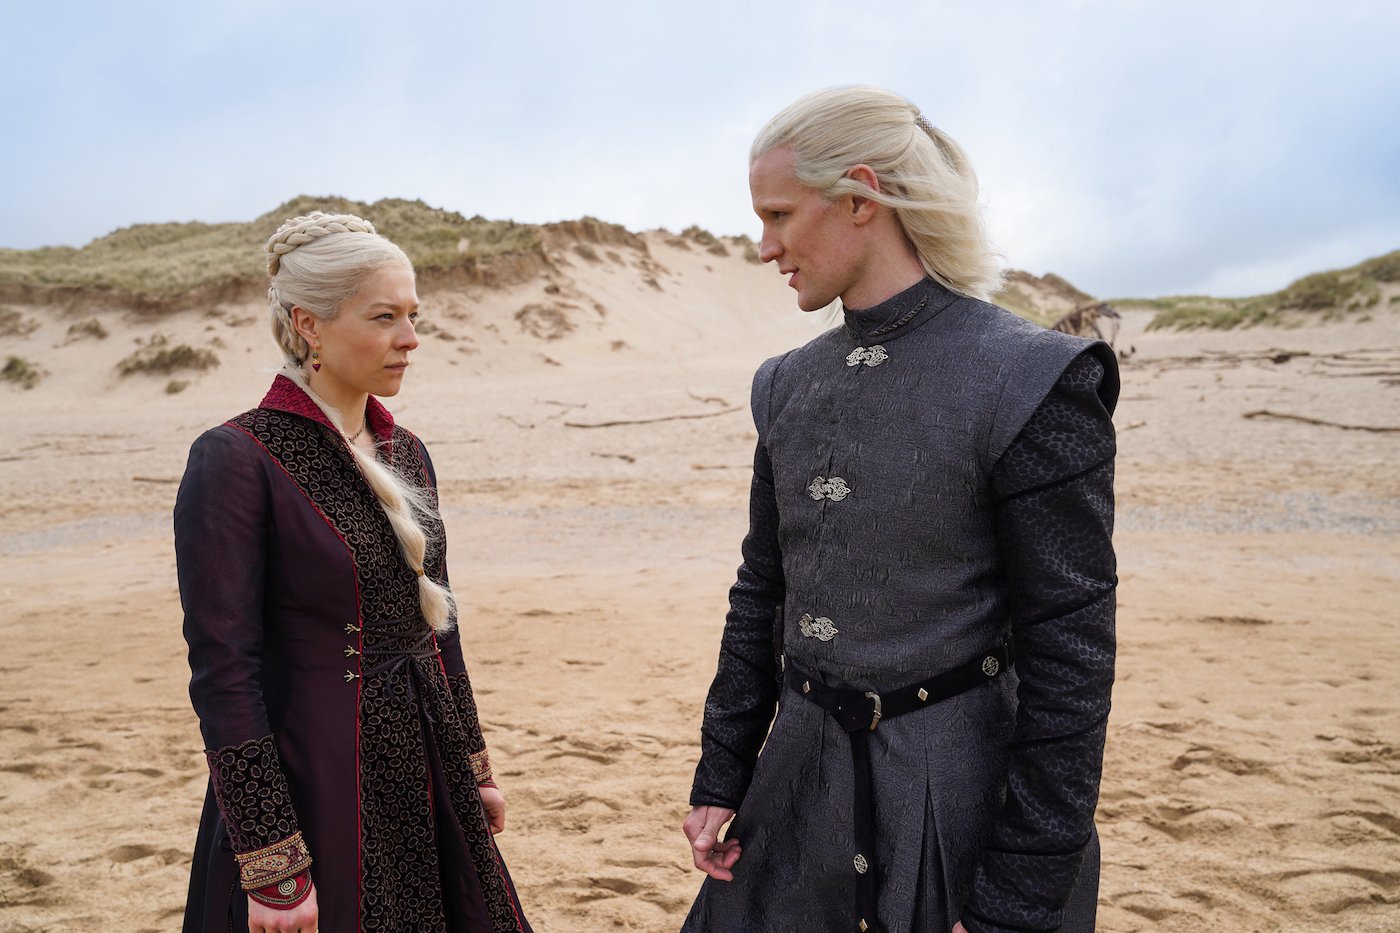 Emma D’Arcy as Princess Rhaenyra Targaryen and Matt Smith as Prince Daemon Targaryen in a production still from the upcoming season of 'House of the Dragon'